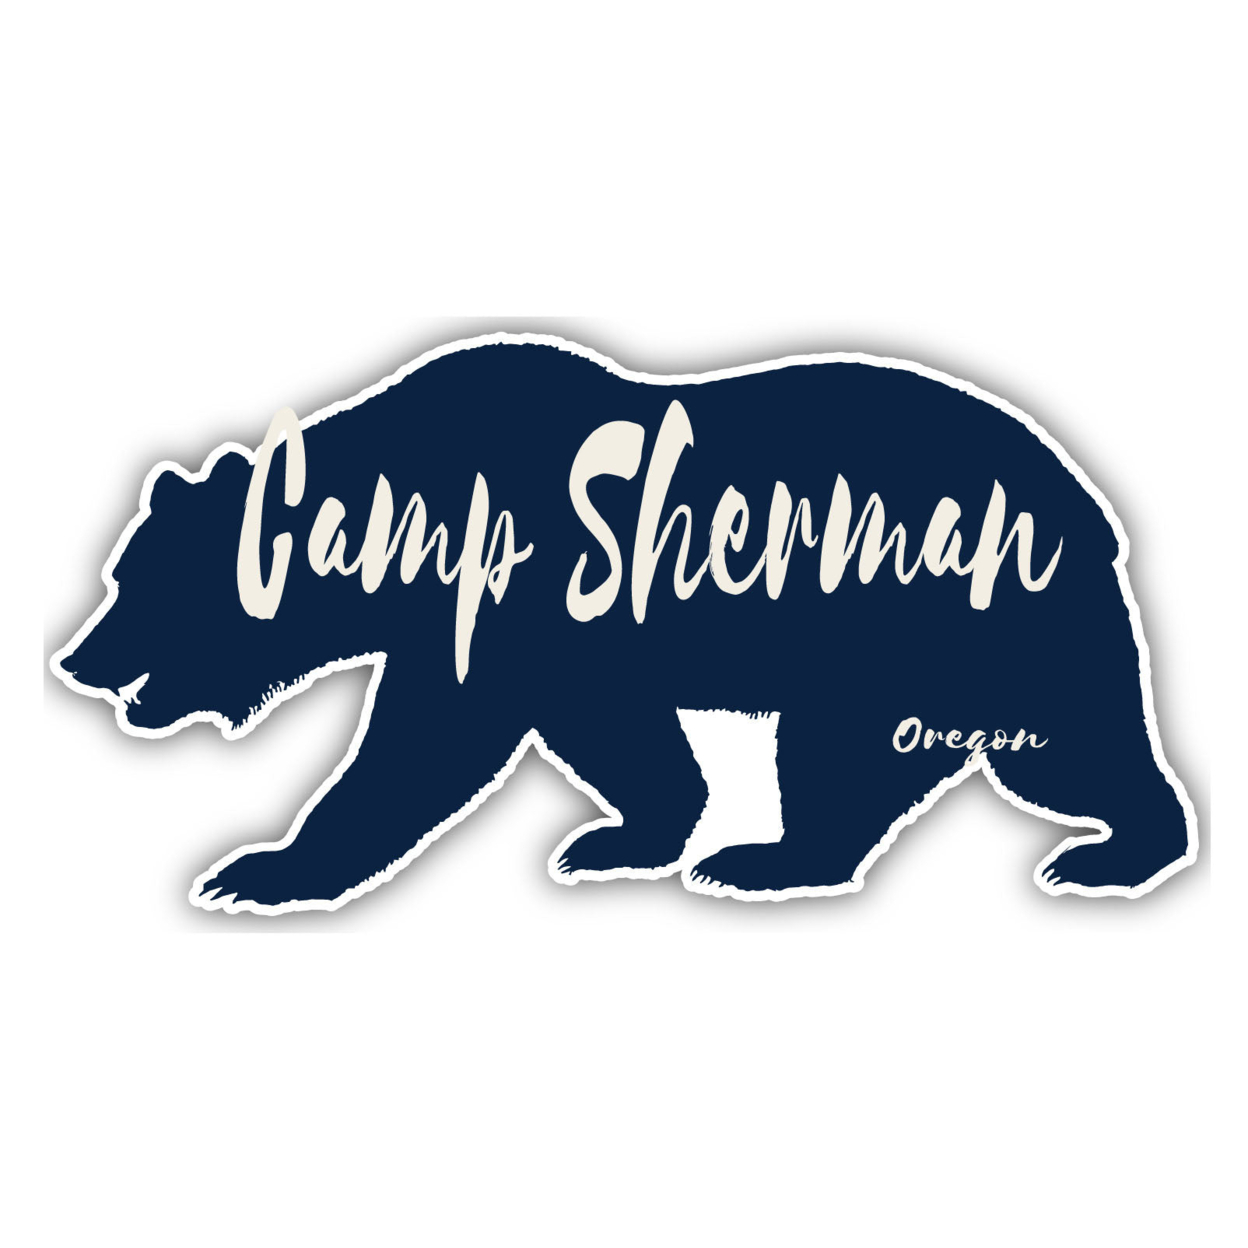 Camp Sherman Oregon Souvenir Decorative Stickers (Choose Theme And Size) - 4-Pack, 4-Inch, Bear